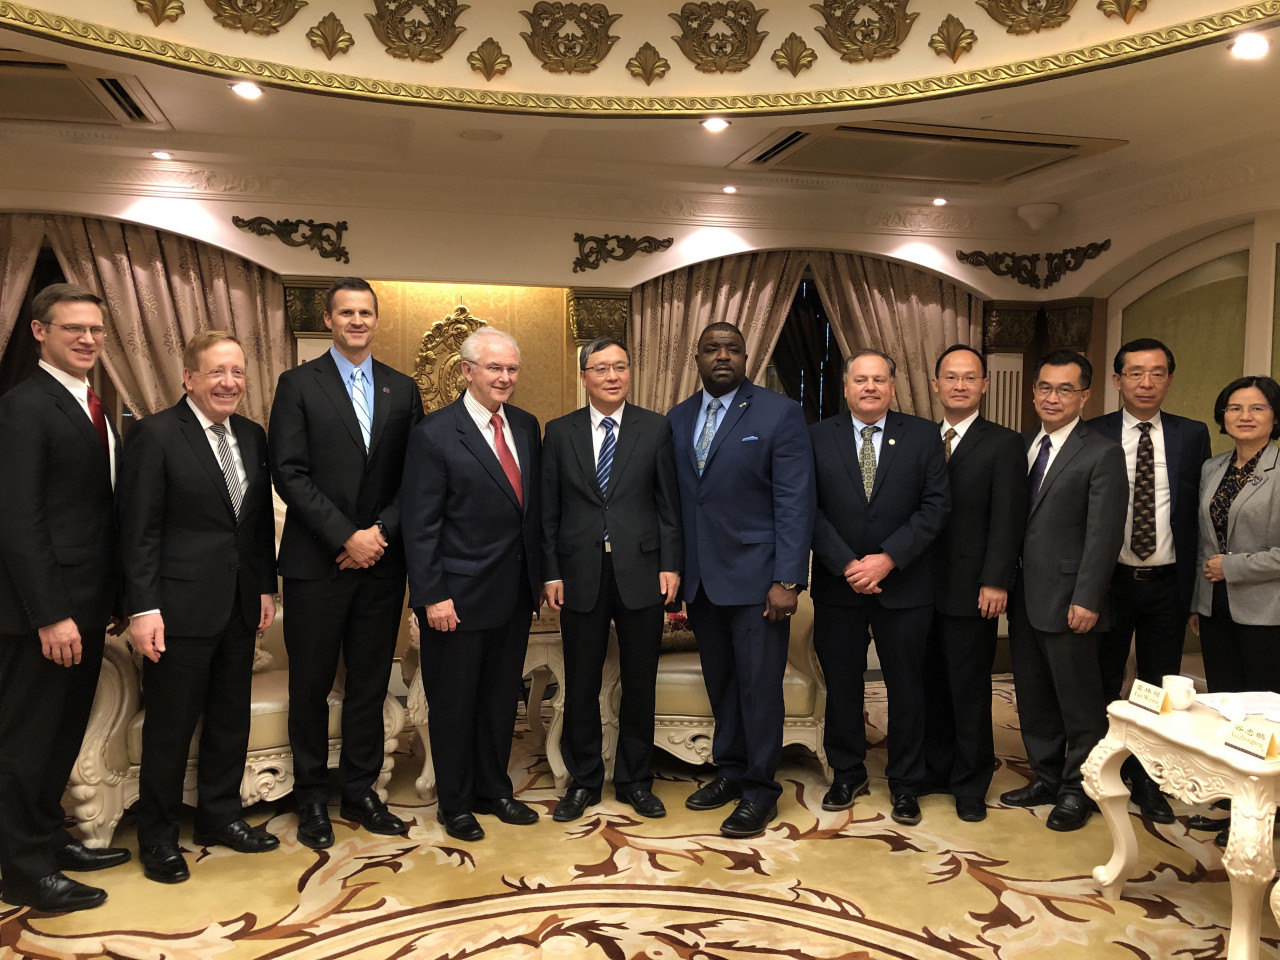 The Inaugural U.S. Heartland Mayor Delegation Trip to China